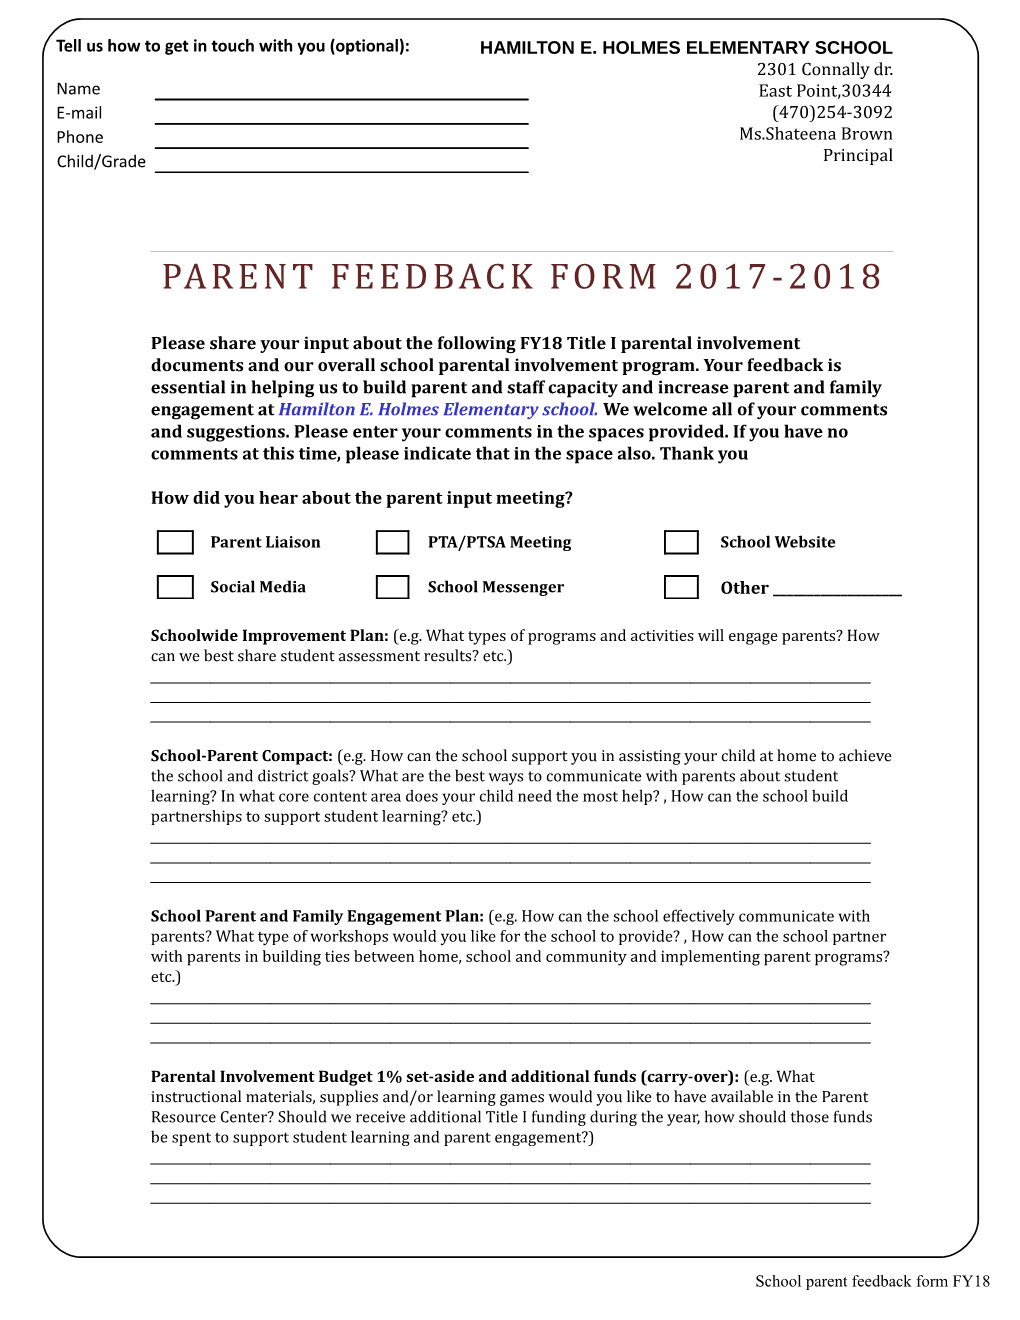 School Parent Feedback Form